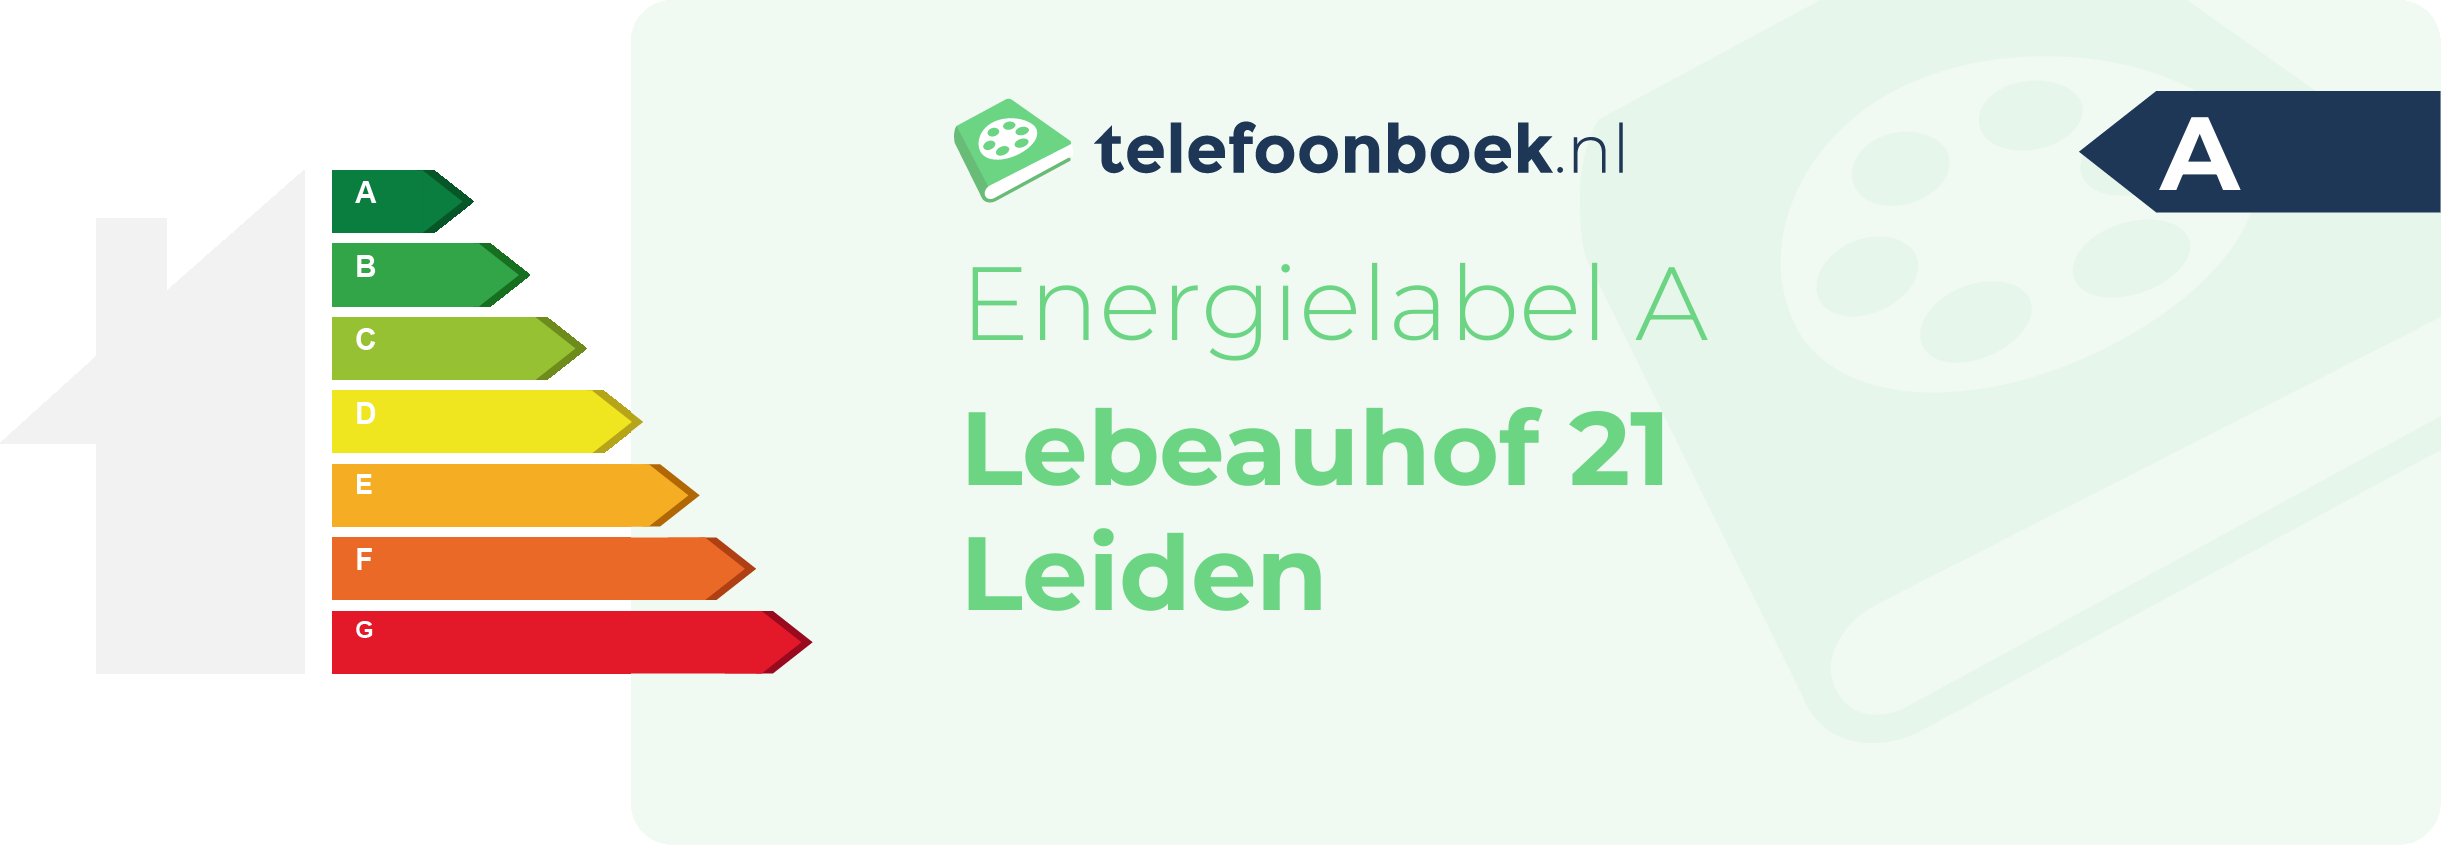 Energielabel Lebeauhof 21 Leiden